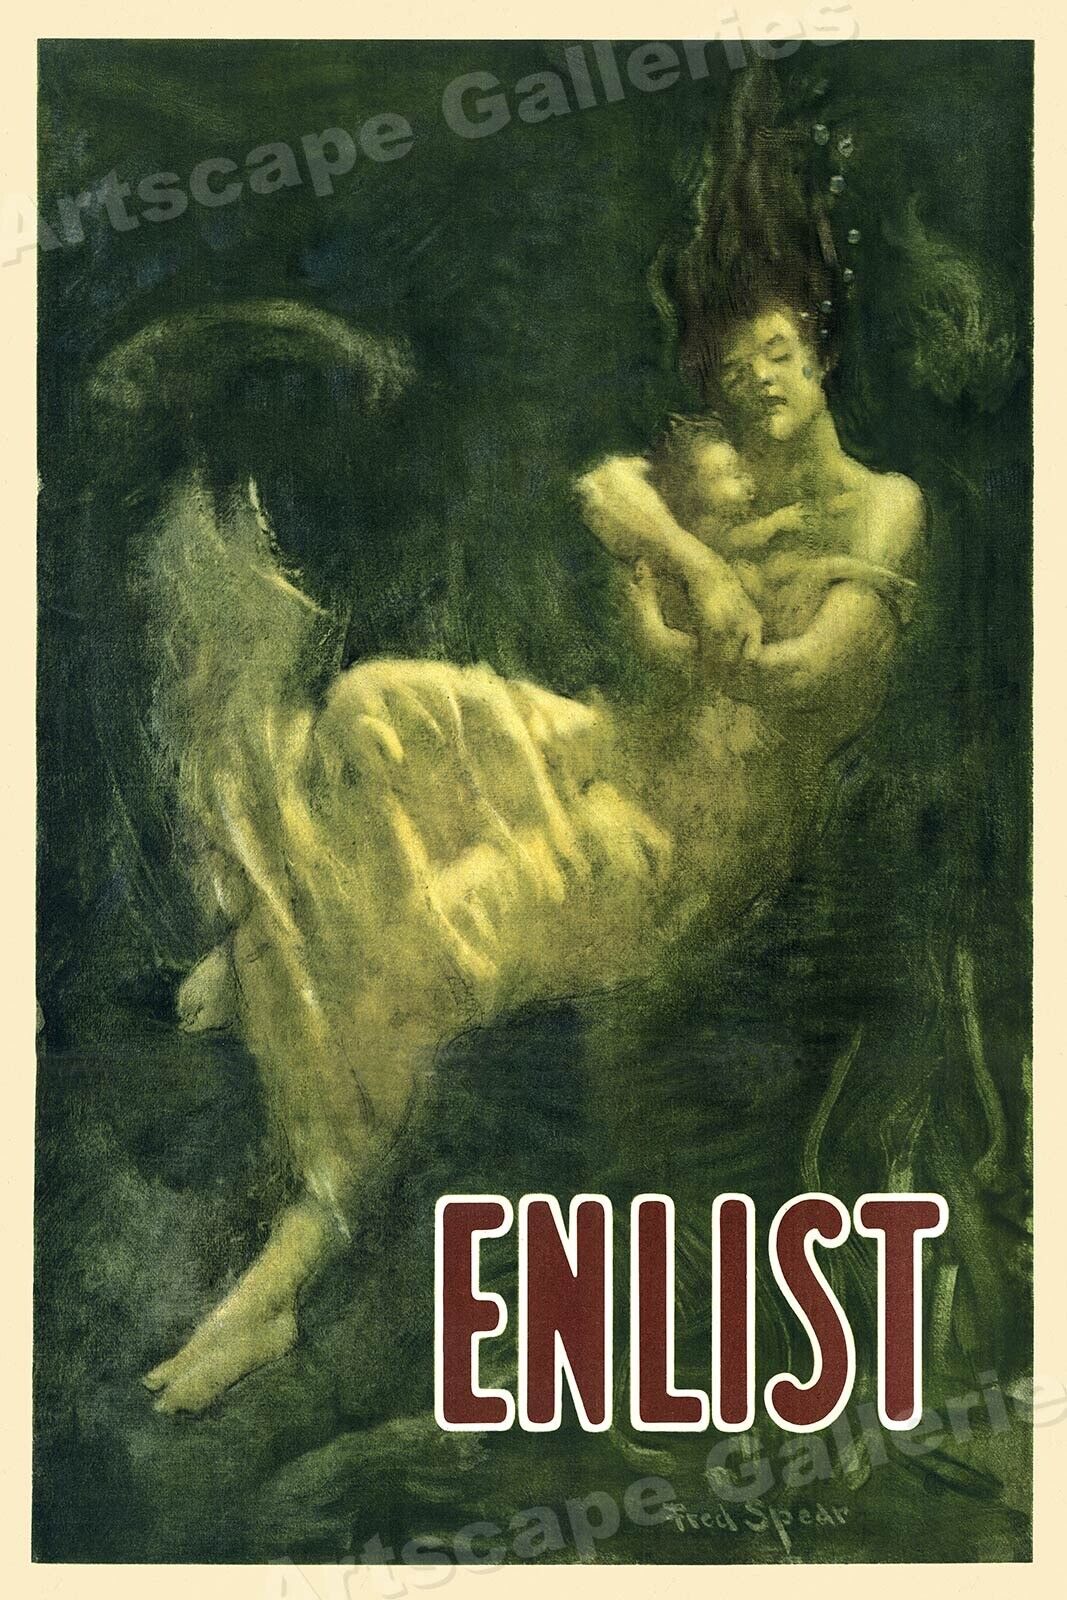 1915 Enlist Lusitania World War I Historic Fred Spear Art Poster - 24x36